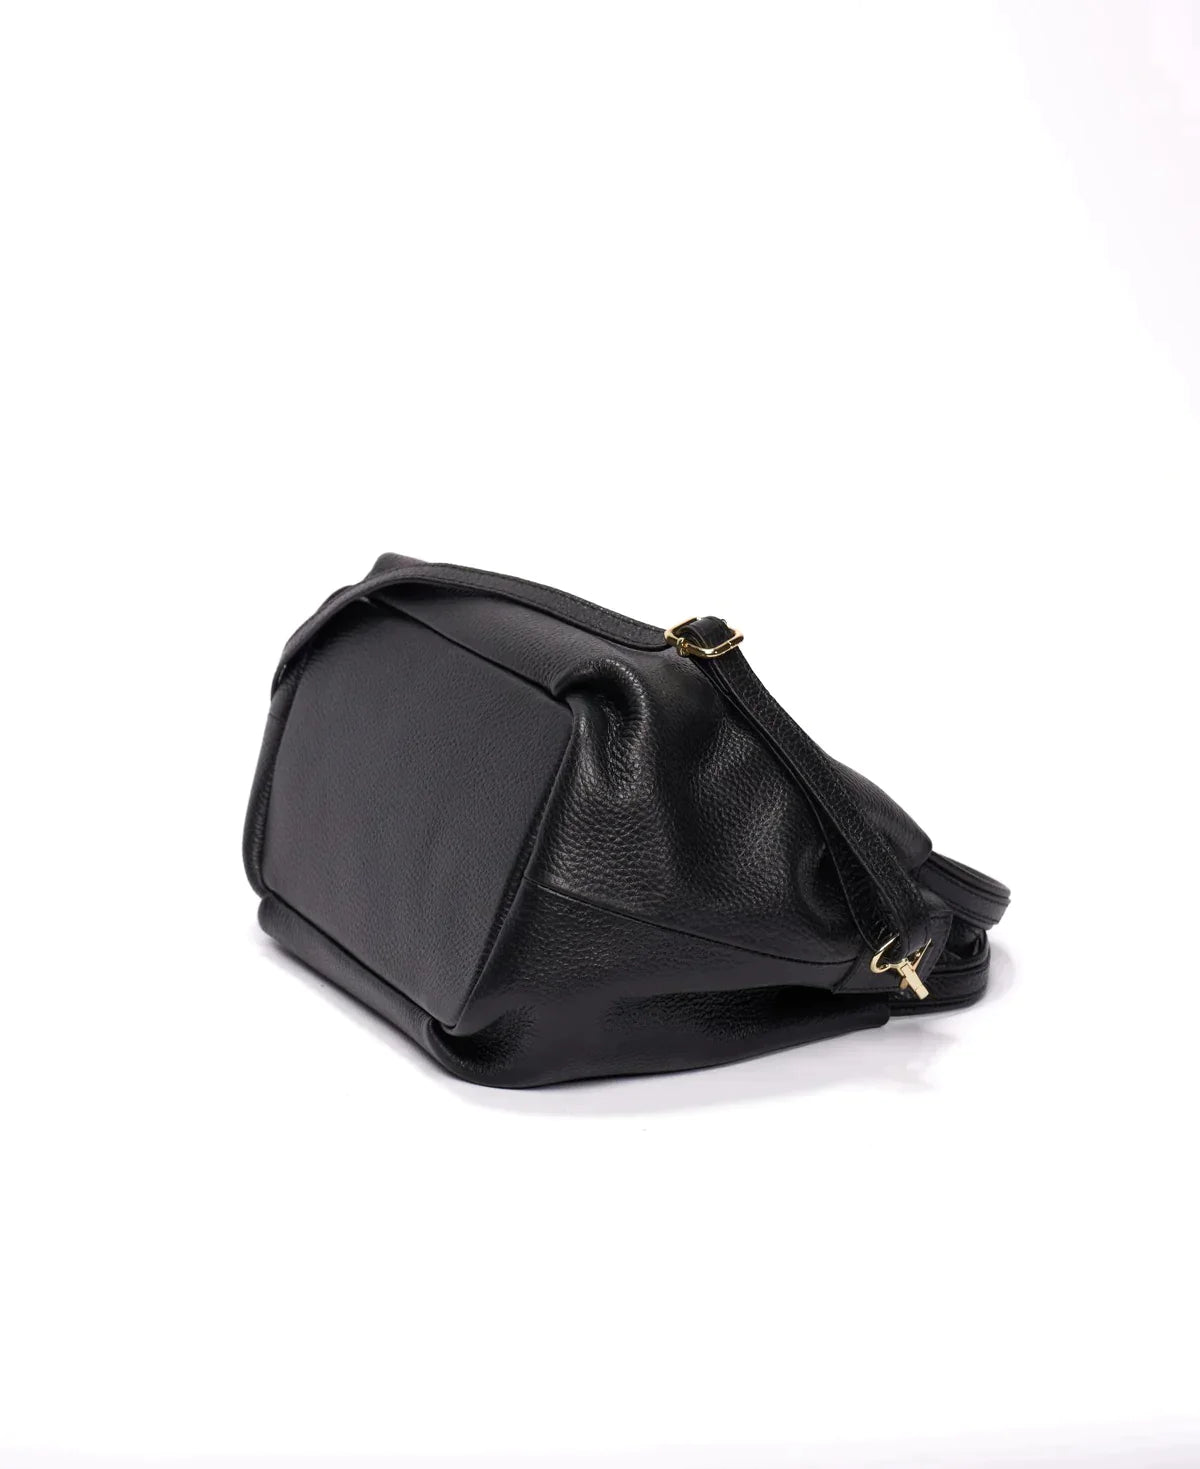 BIDINIS Uffizi Soft Leather Bag